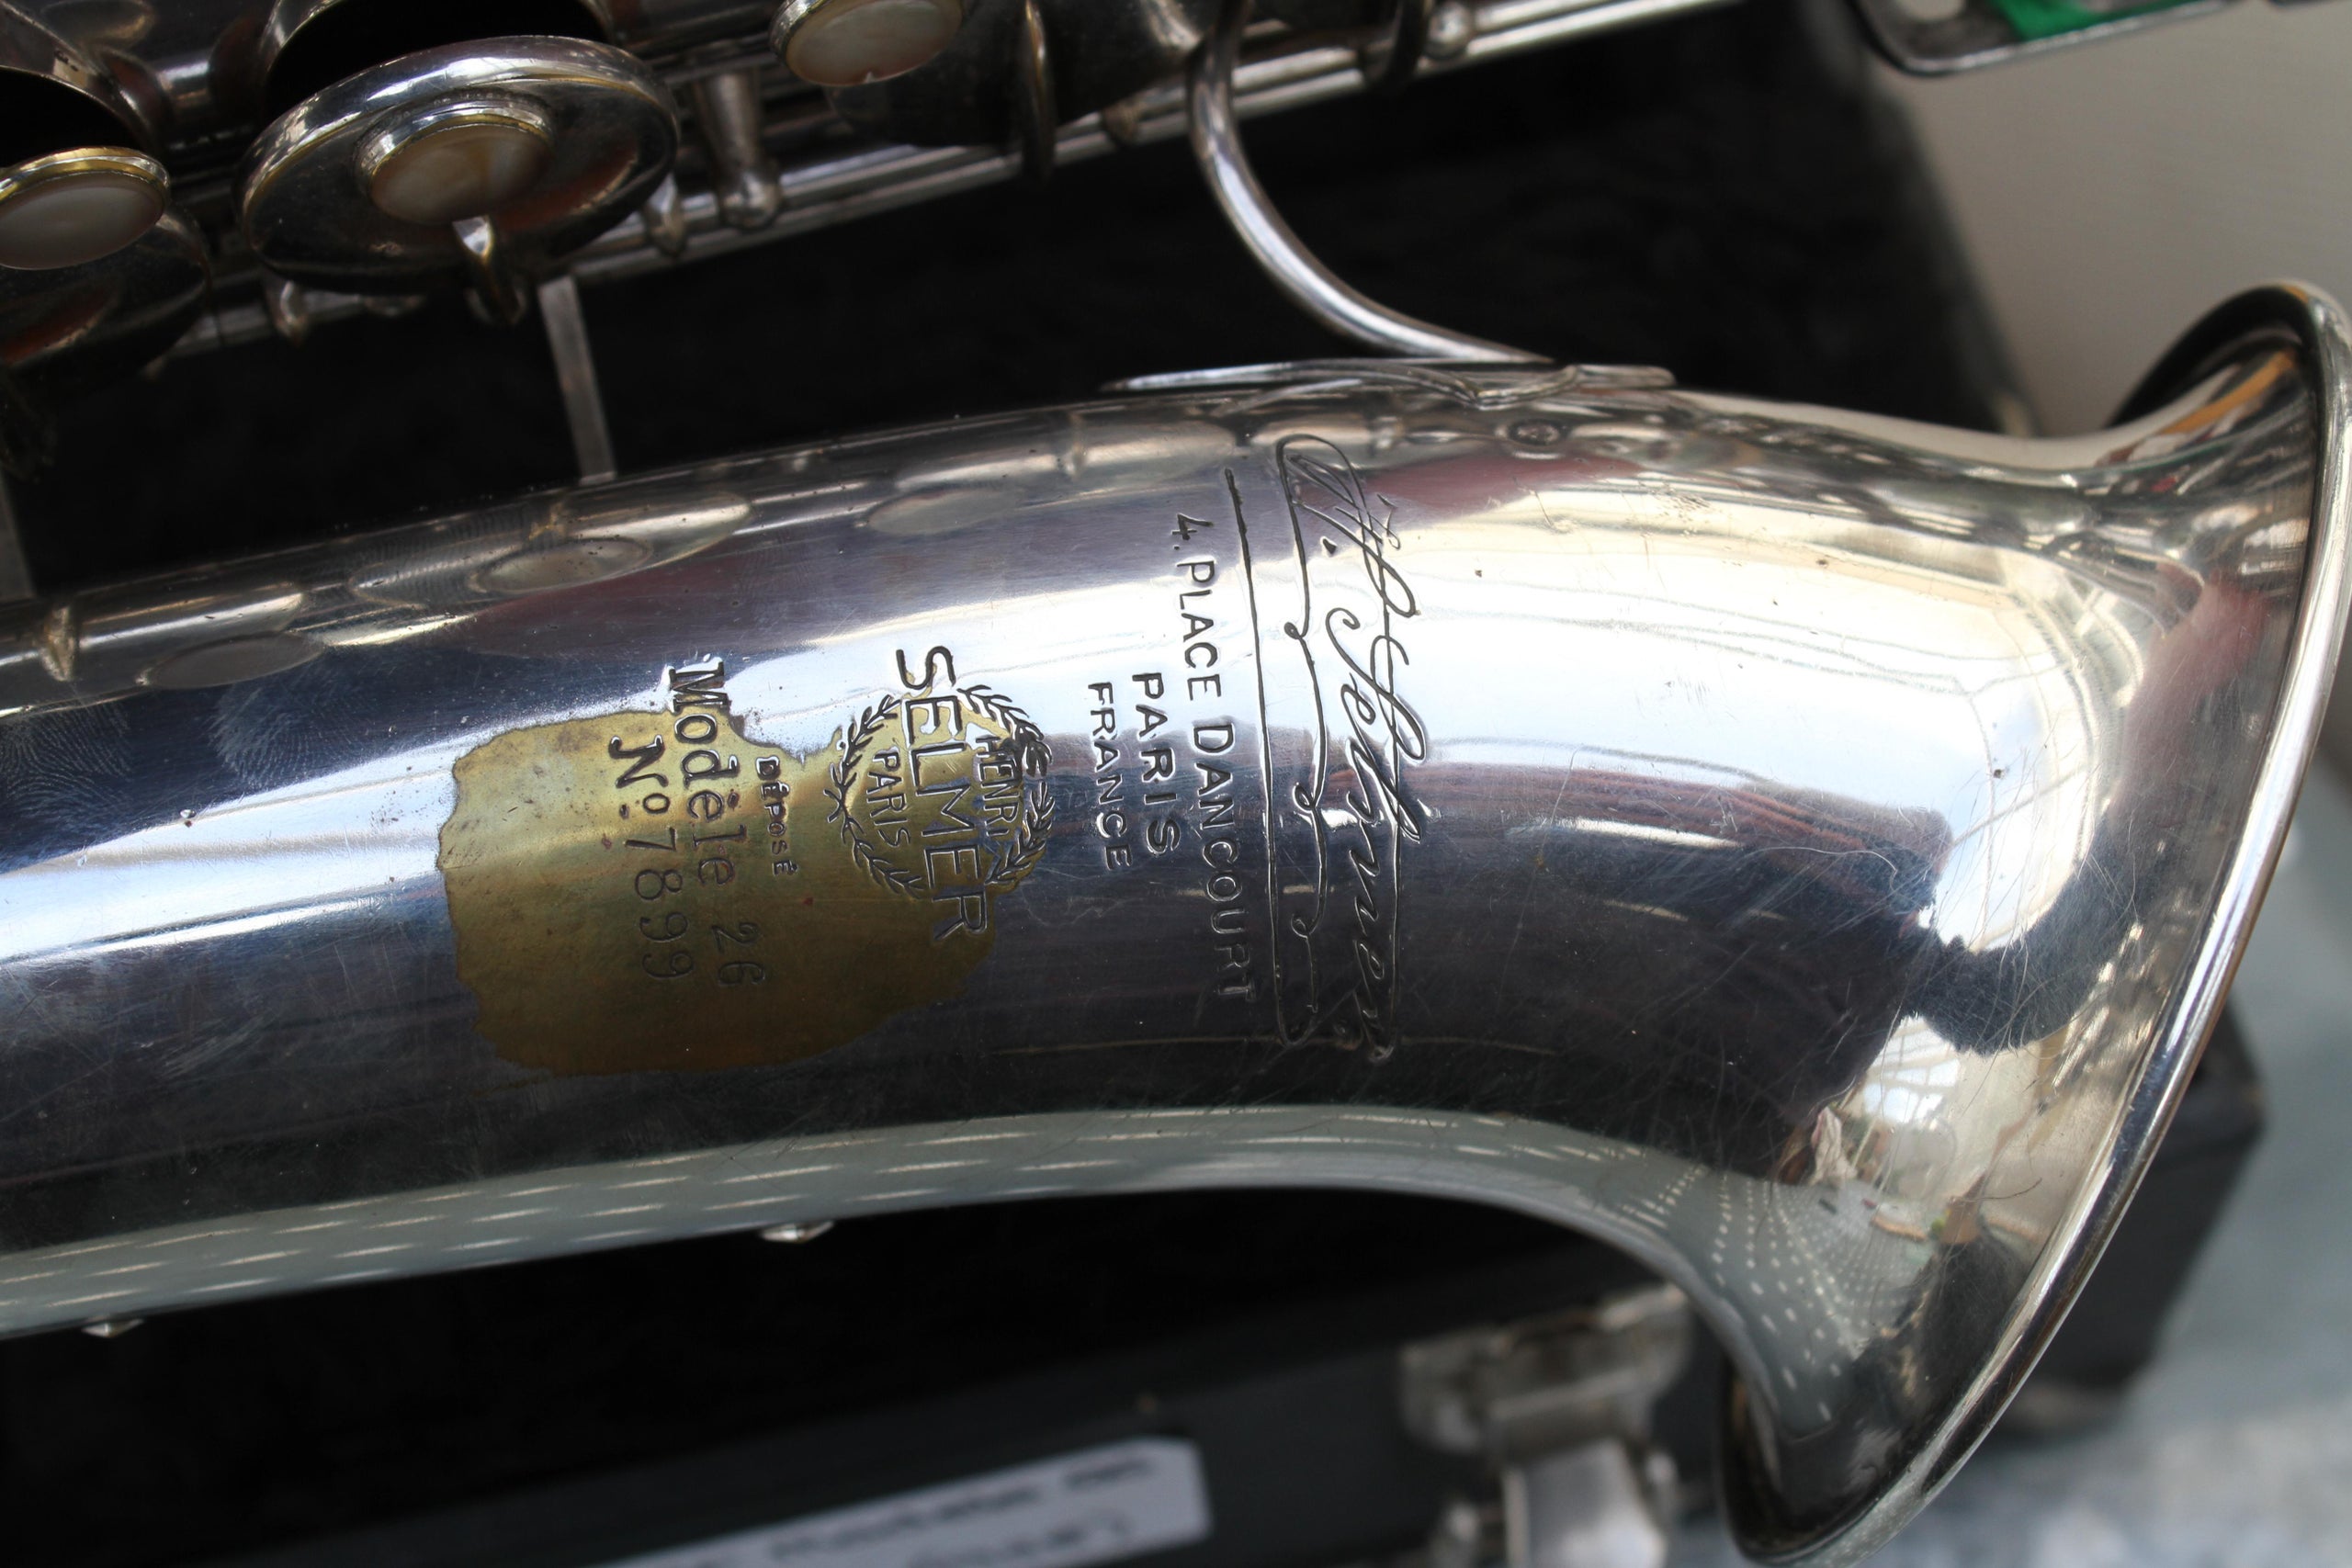 Selmer Selmer Model 26 Eb Alto Saxophone